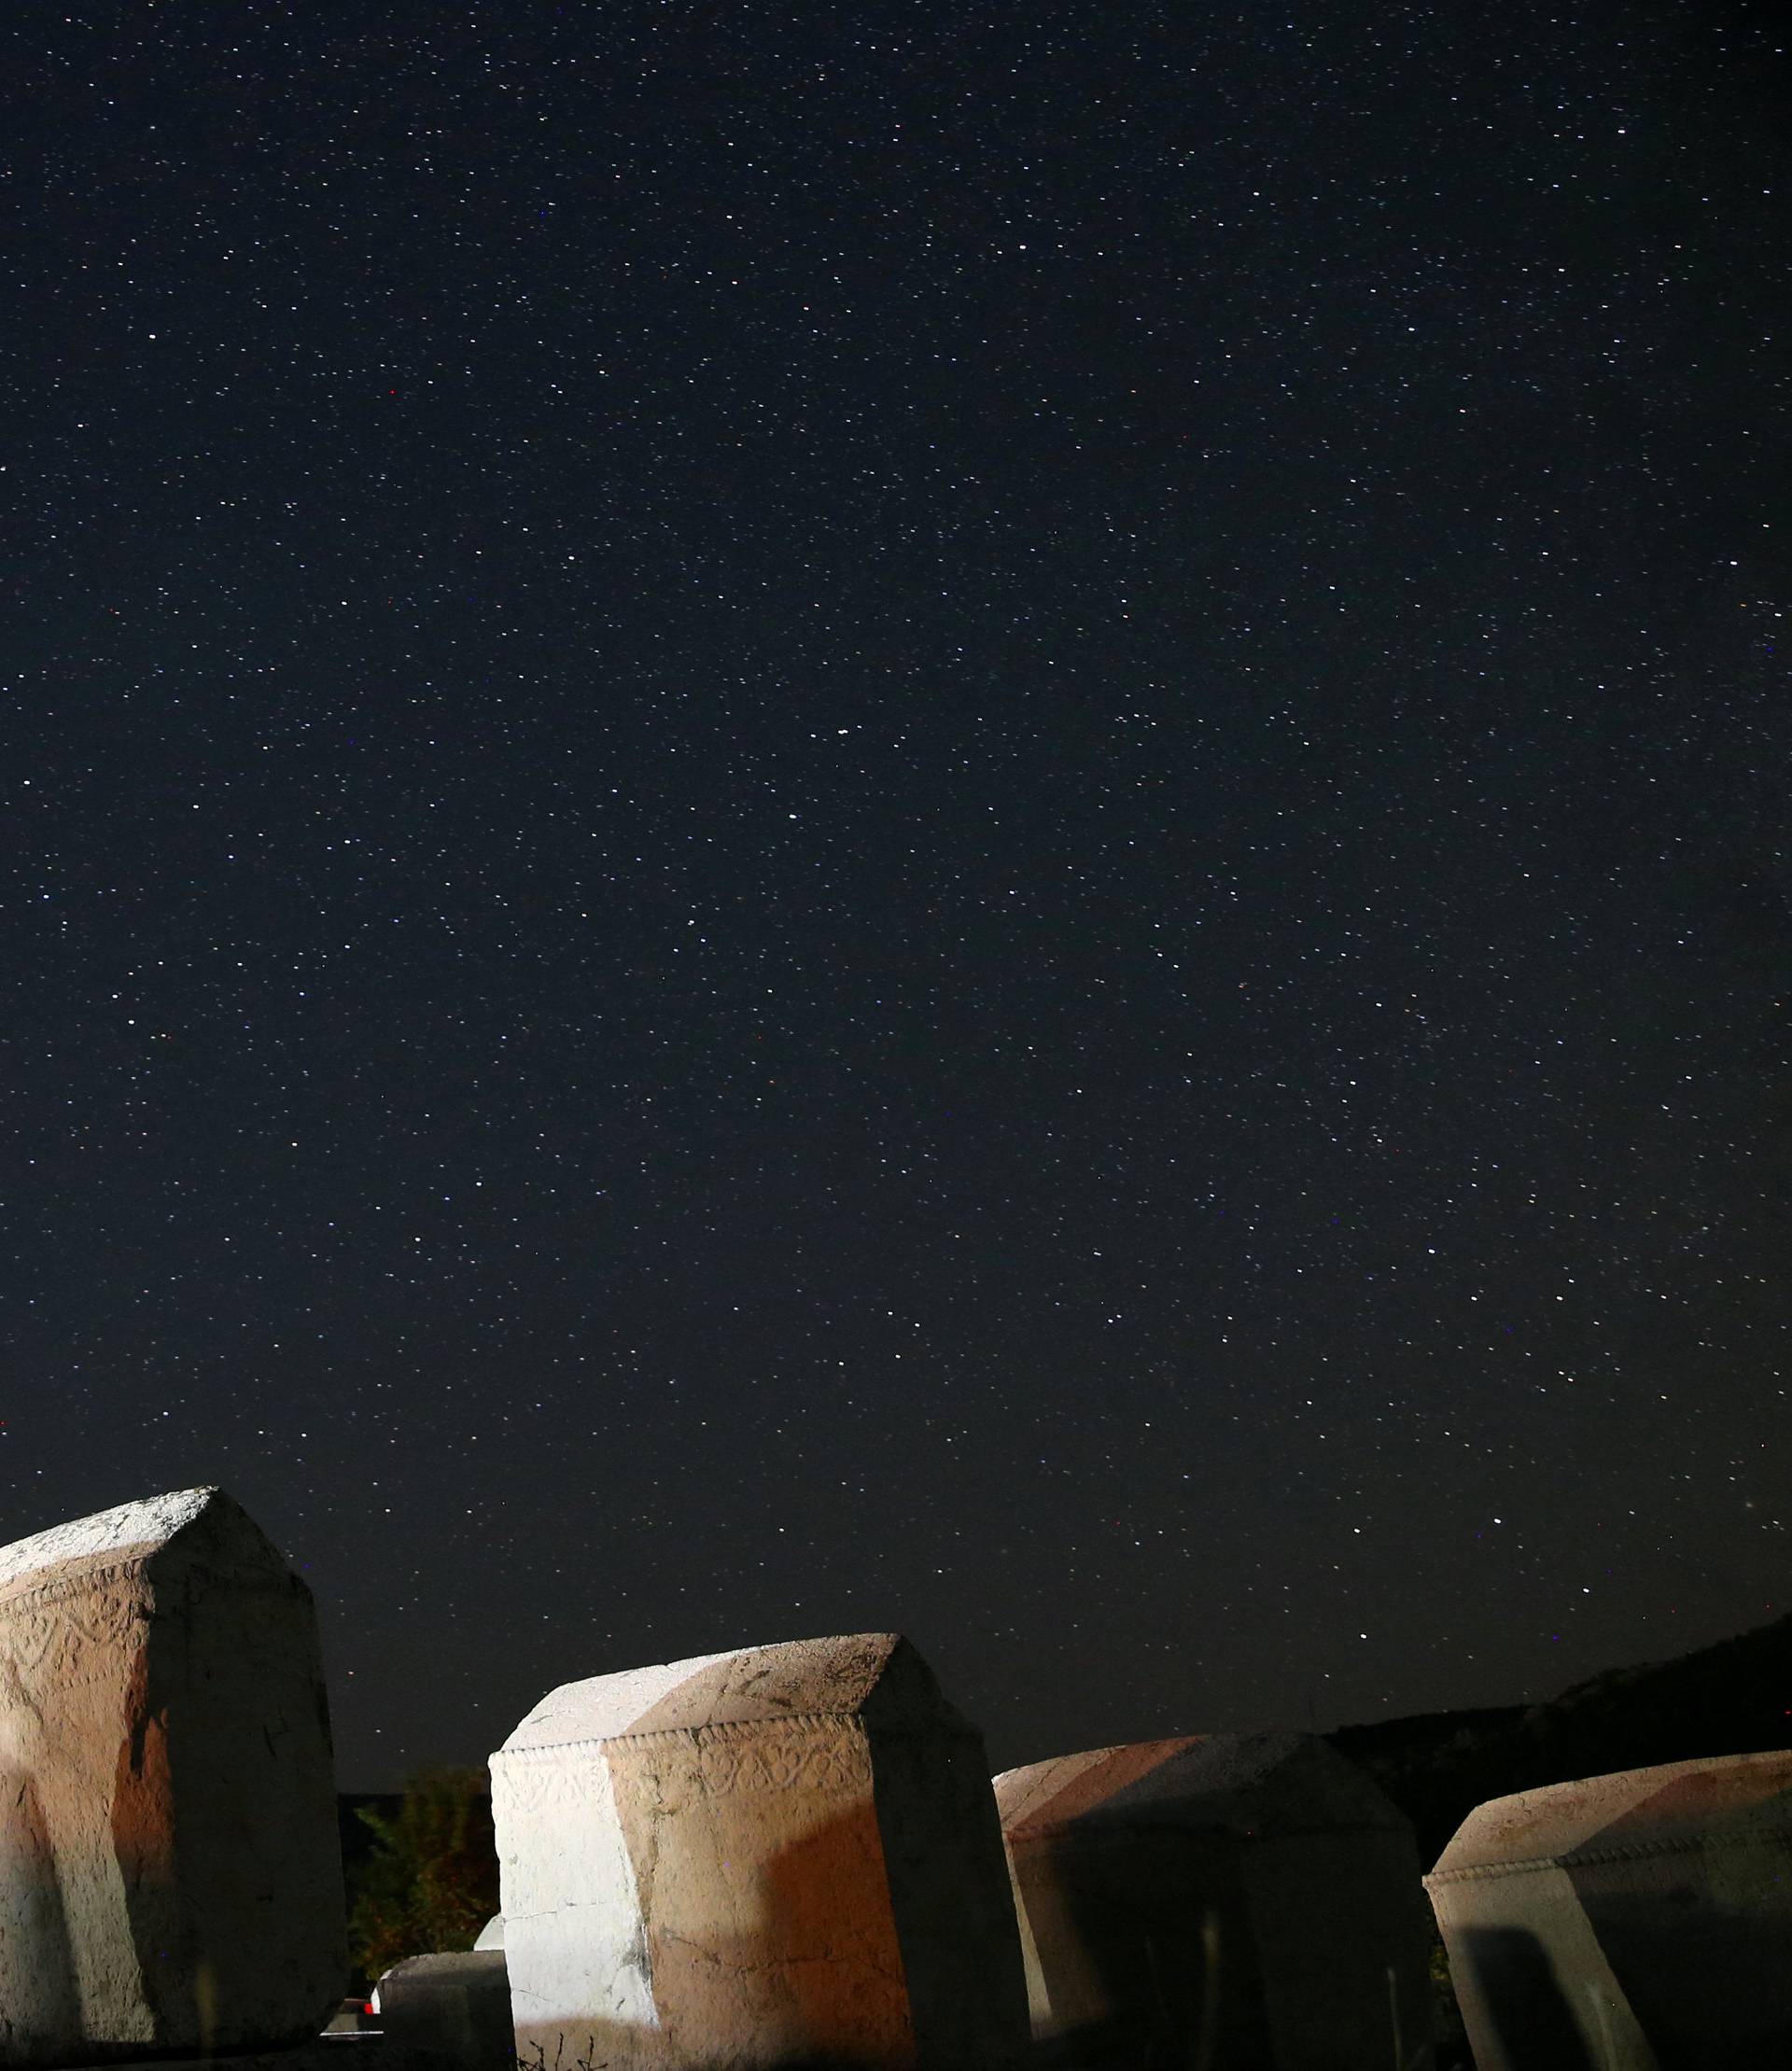 A meteor streaks past stars in the night sky above medieval tombstones in Radmilje near Stolac